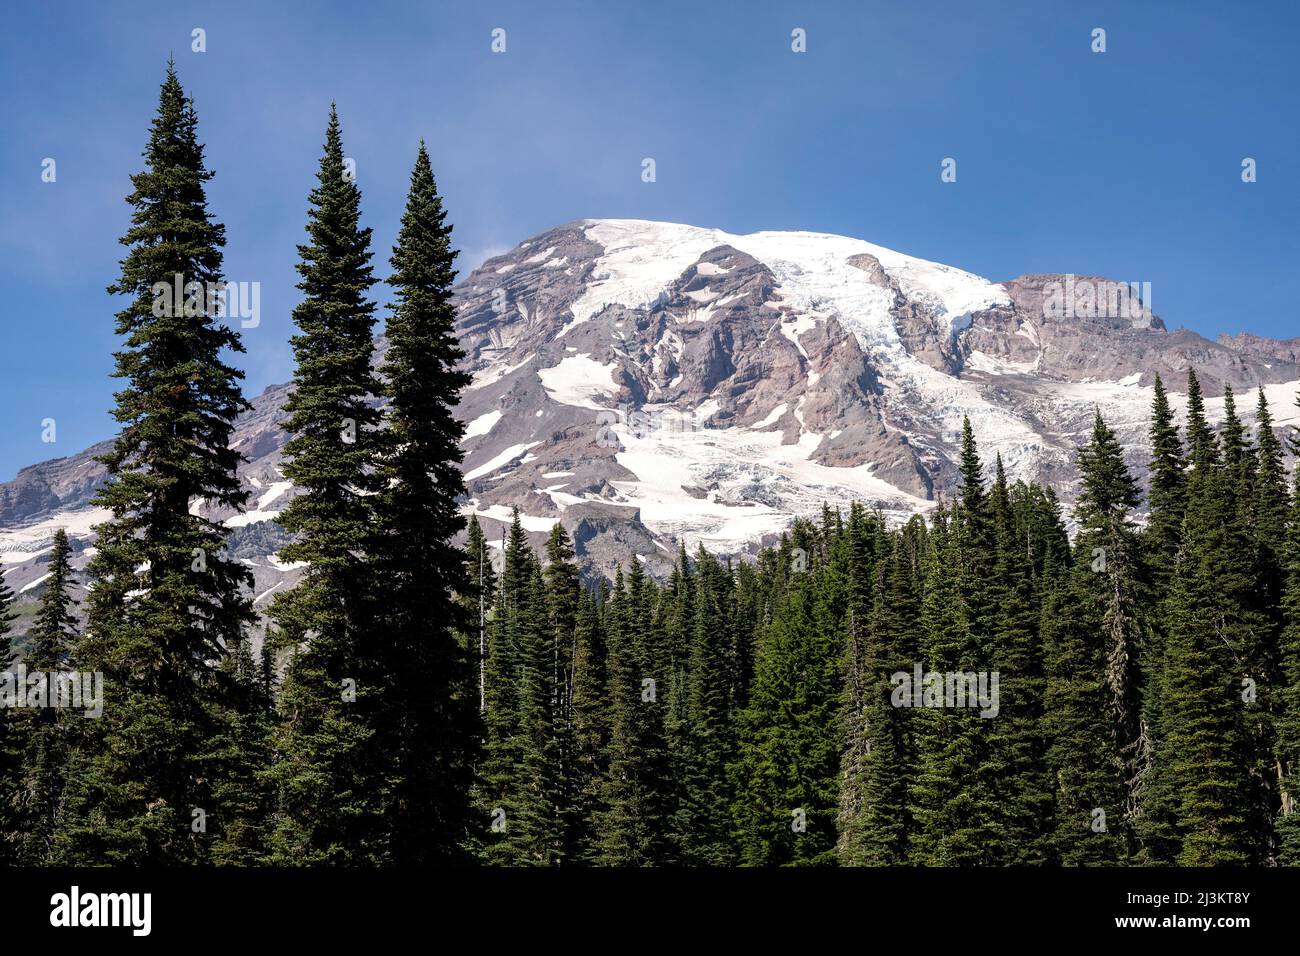 Fir trees grow on the slopes of Mount Rainier, Mount Rainier National Park; Longmire, Washington, United States of America Stock Photo